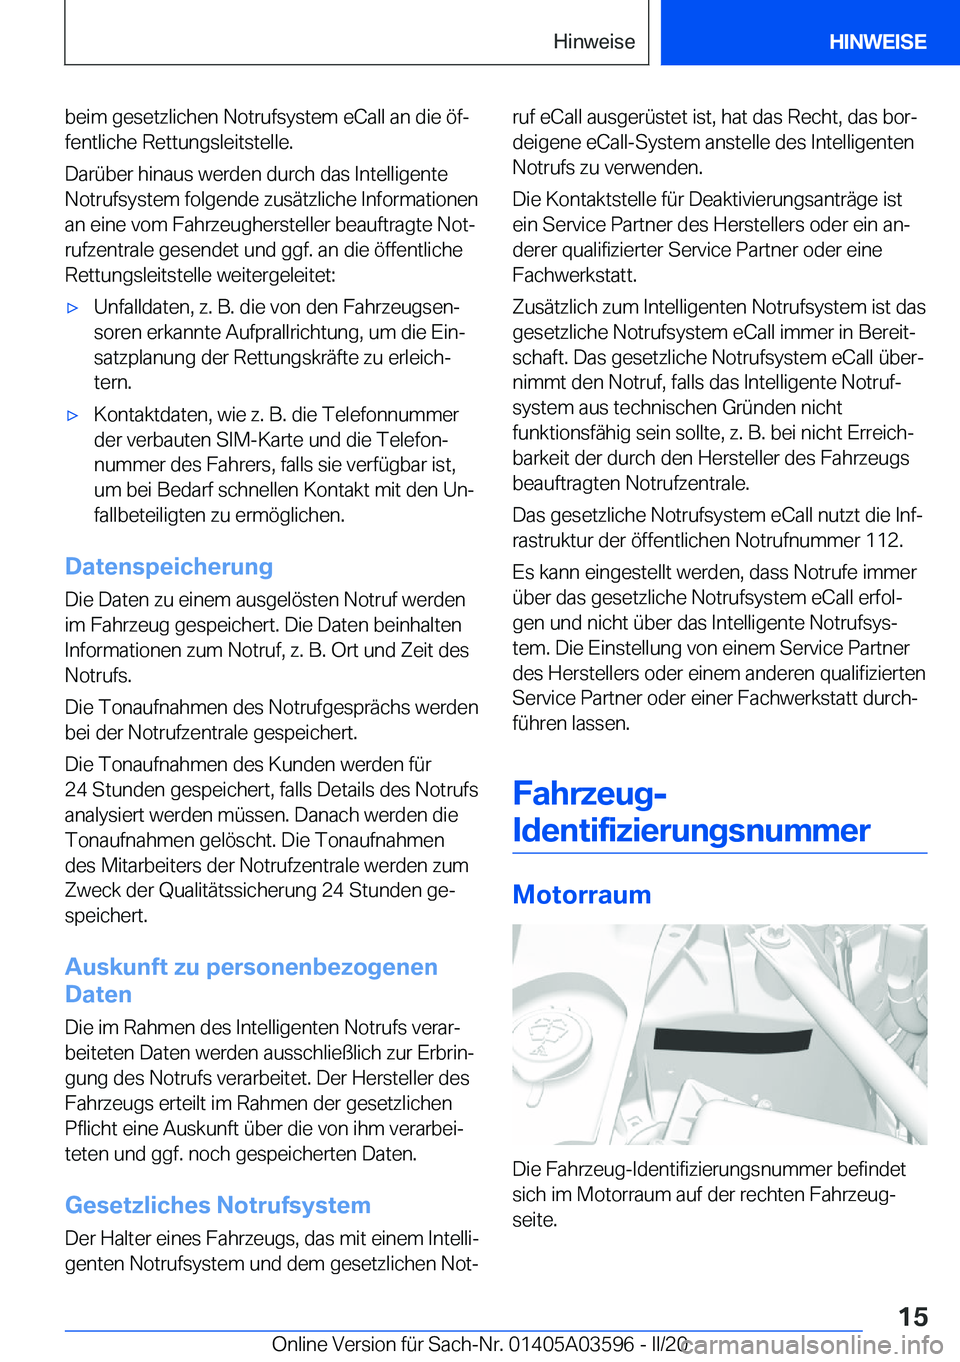 BMW X4 2020  Betriebsanleitungen (in German) �b�e�i�m��g�e�s�e�t�z�l�i�c�h�e�n��N�o�t�r�u�f�s�y�s�t�e�m��e�C�a�l�l��a�n��d�i�e��